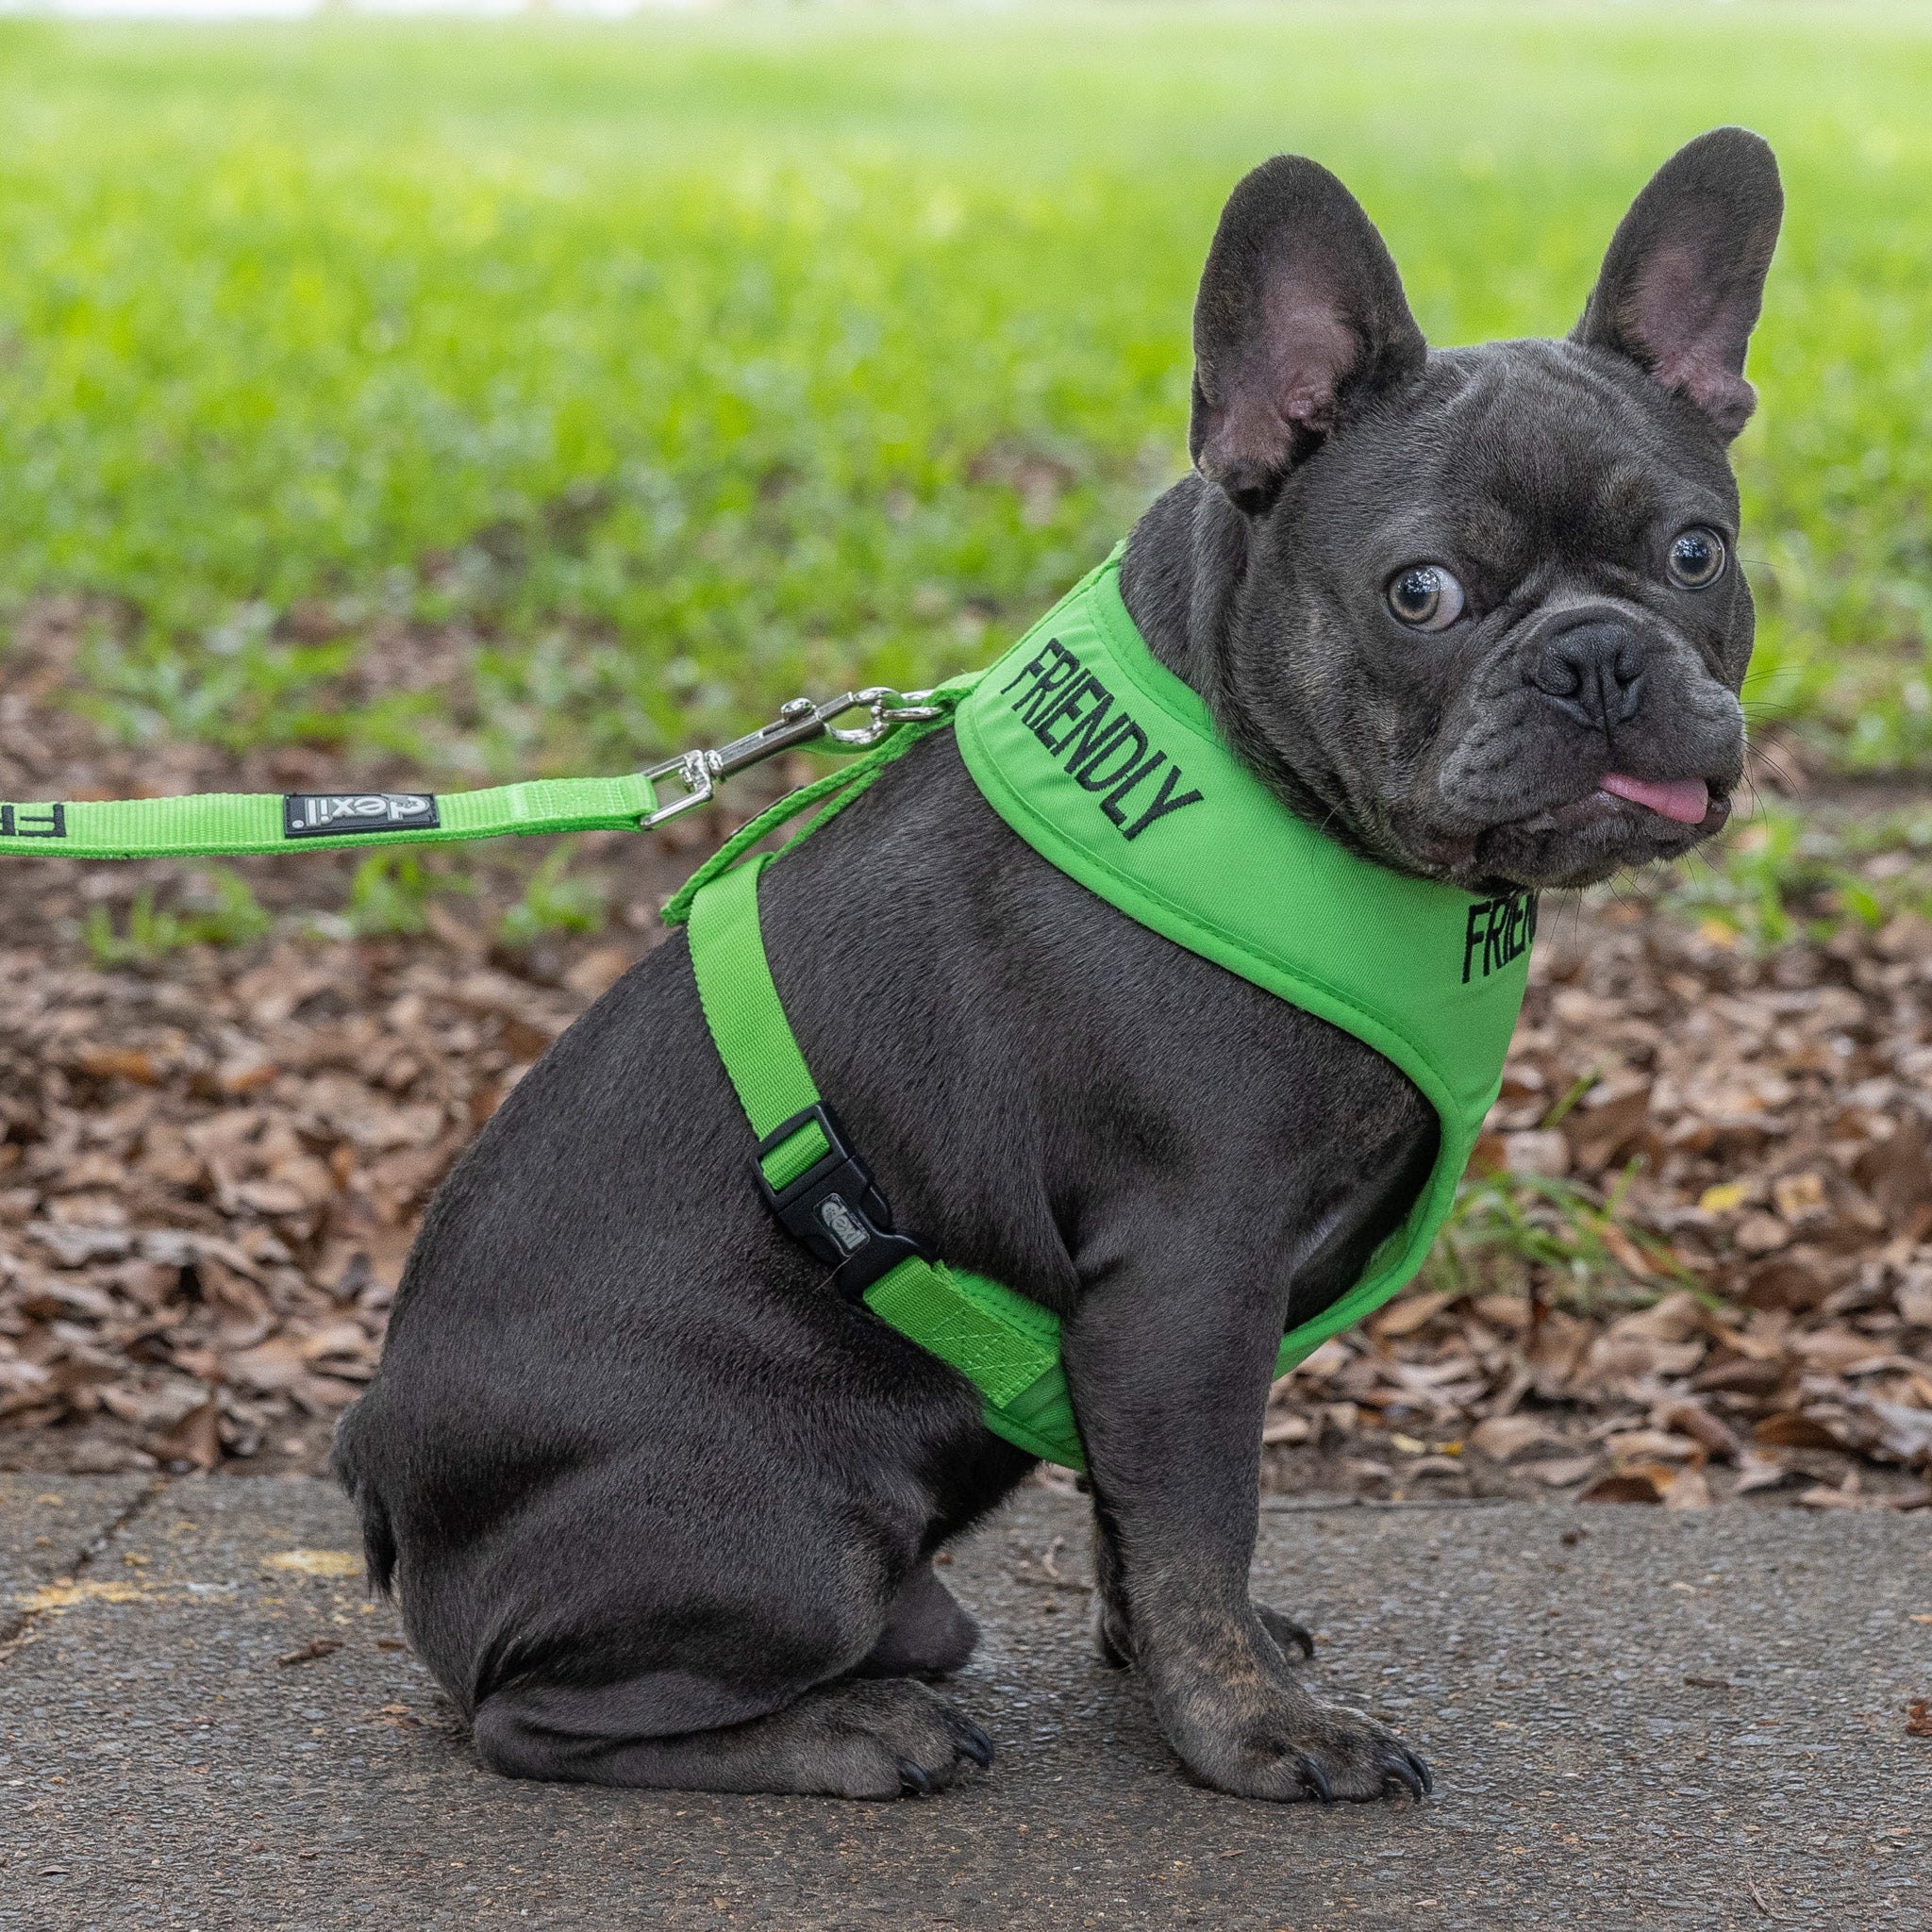 Friendly Dog Collars Green FRIENDLY Medium Vest Harness